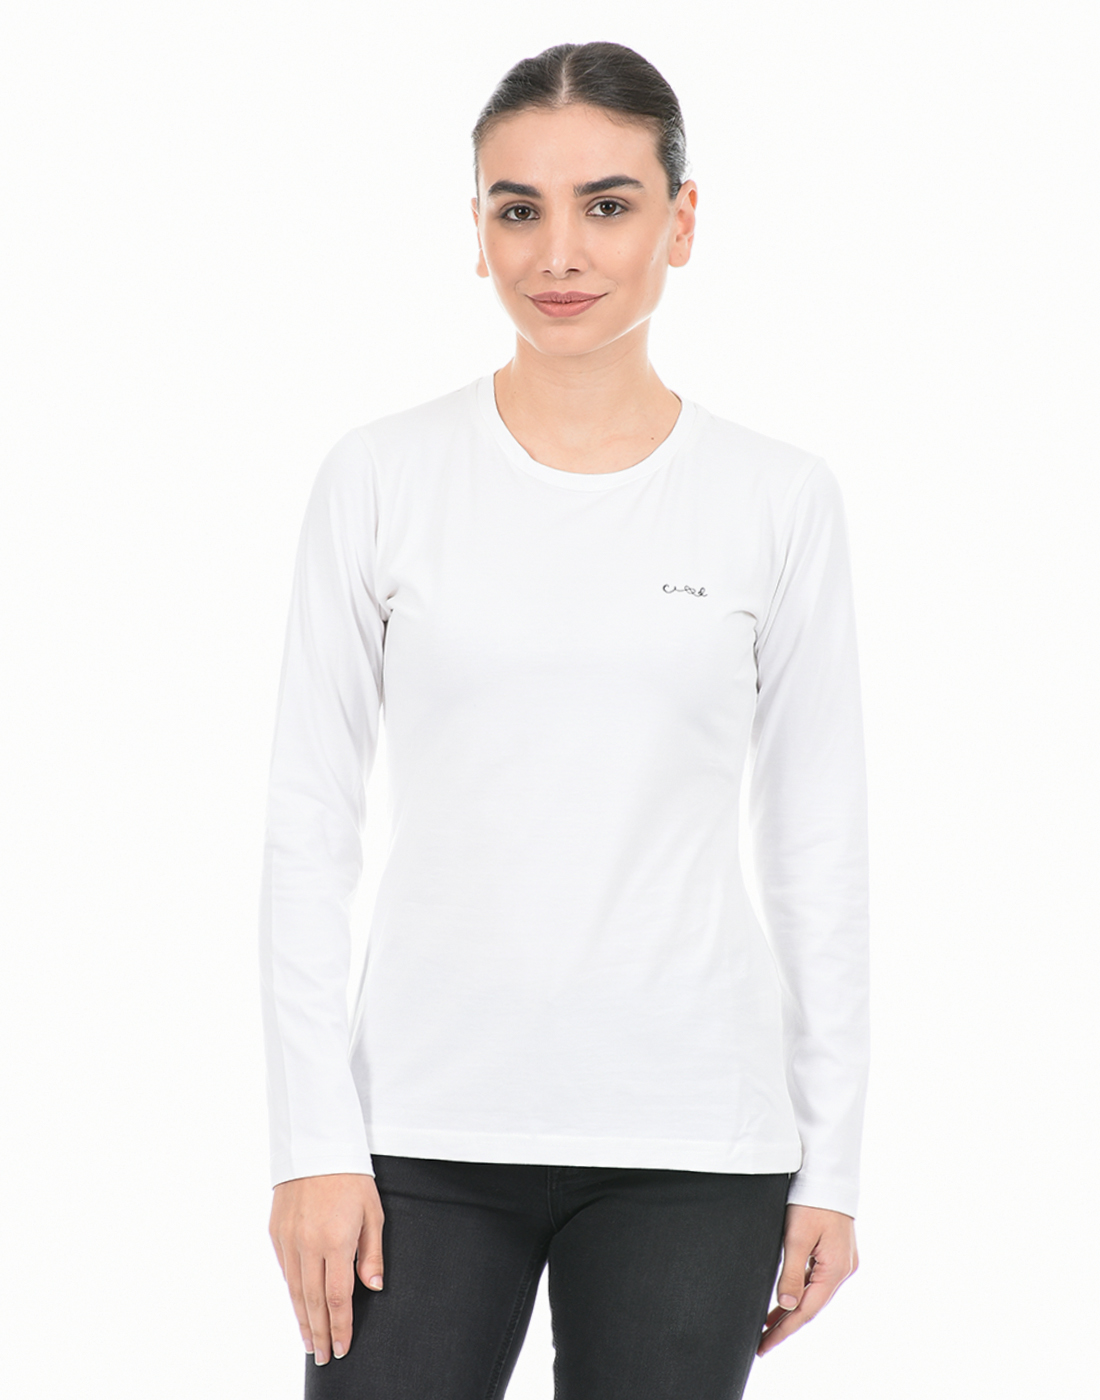 Cloak & Decker by Monte Carlo Women Solid White T-Shirt